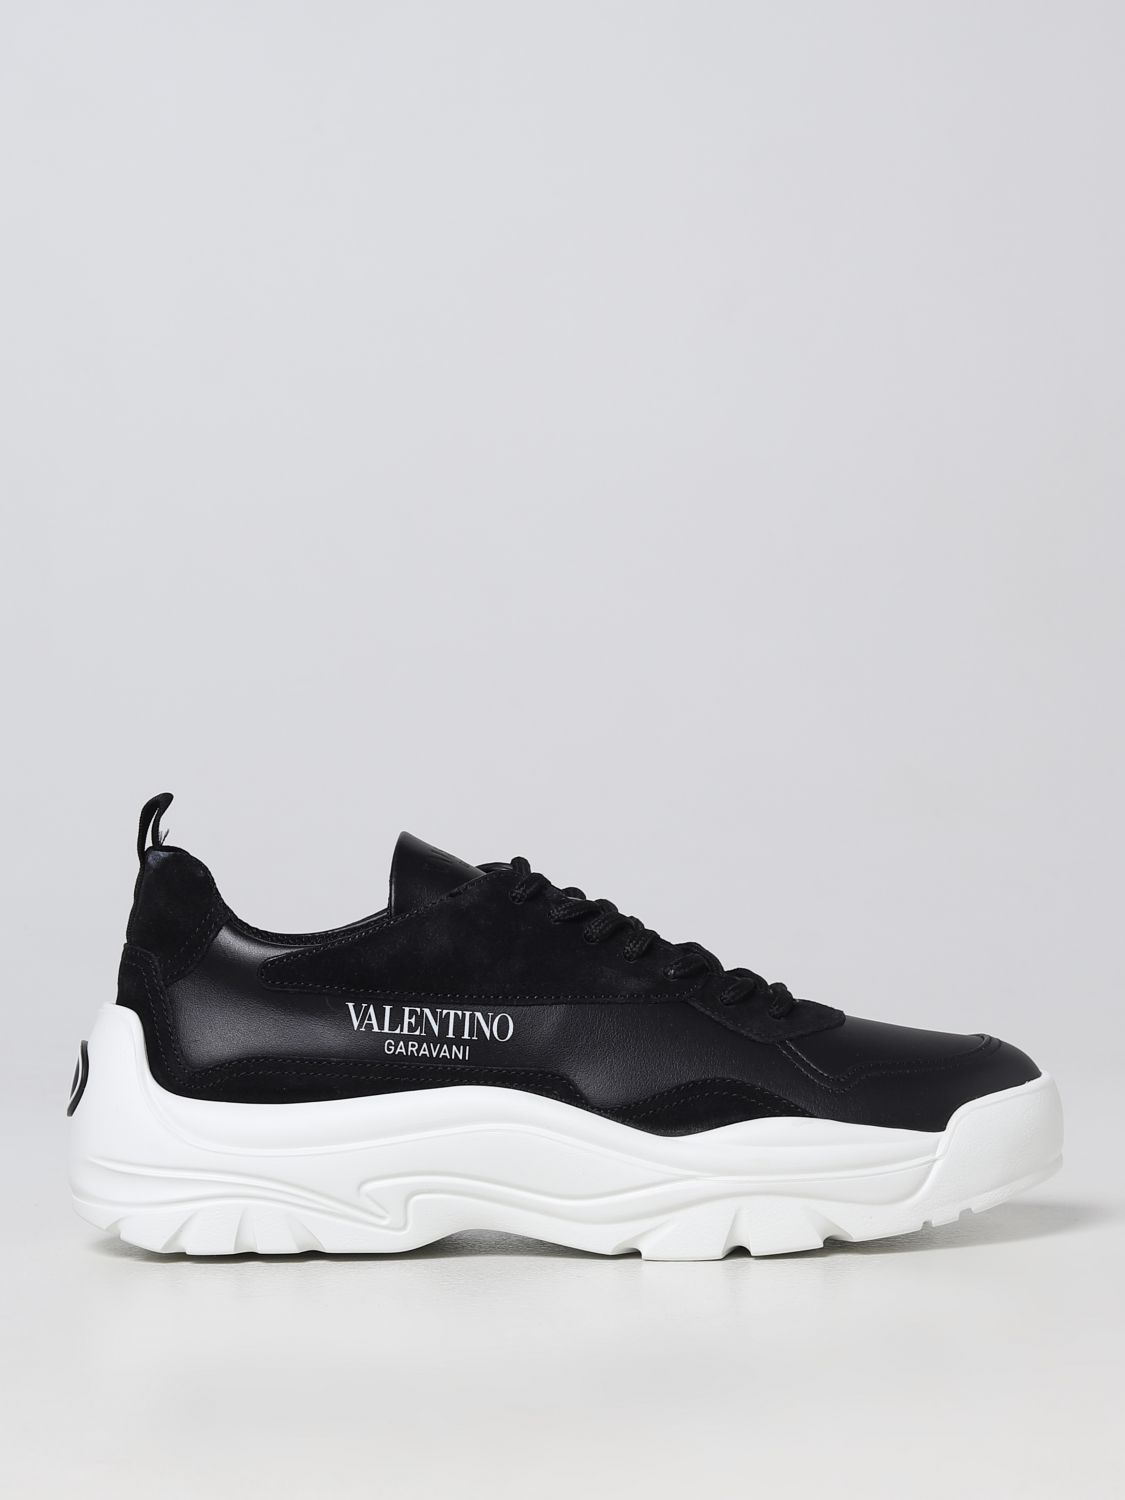 VALENTINO GARAVANI: Gumboy leather sneakers - Black | Valentino Garavani sneakers 2Y2S0B17VRN online at